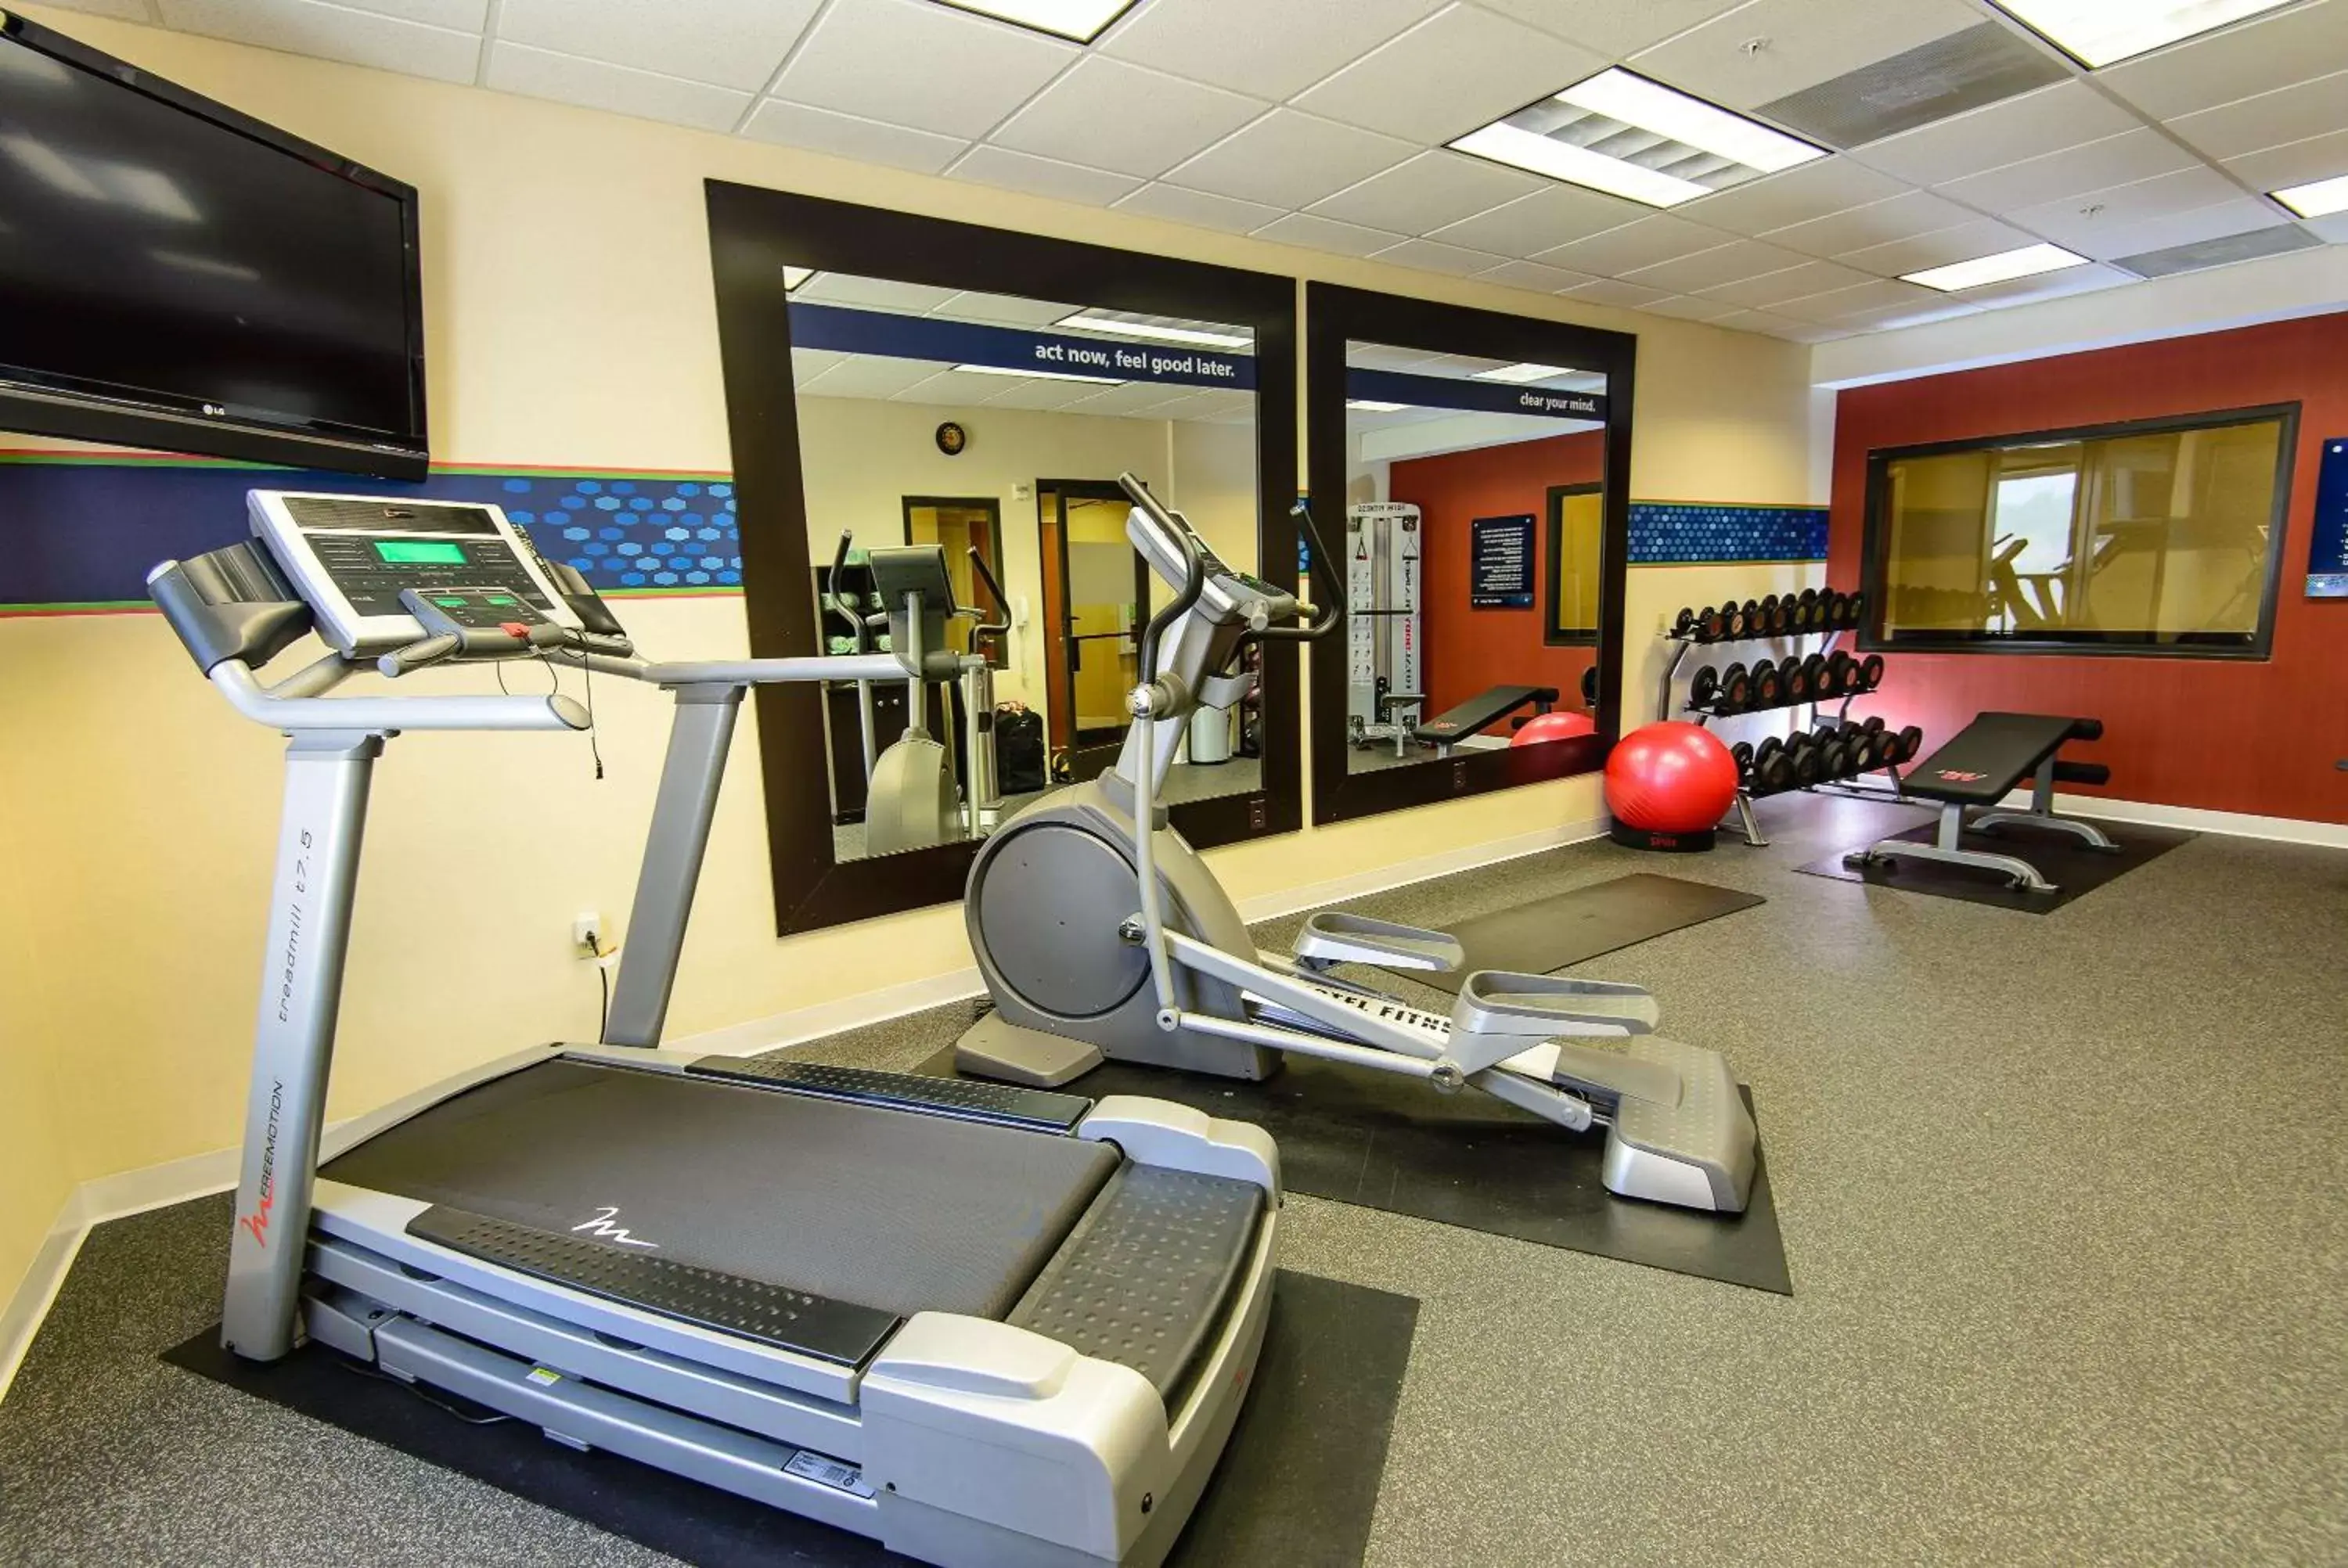 Fitness centre/facilities, Fitness Center/Facilities in Hampton Inn Houston-Pearland, TX